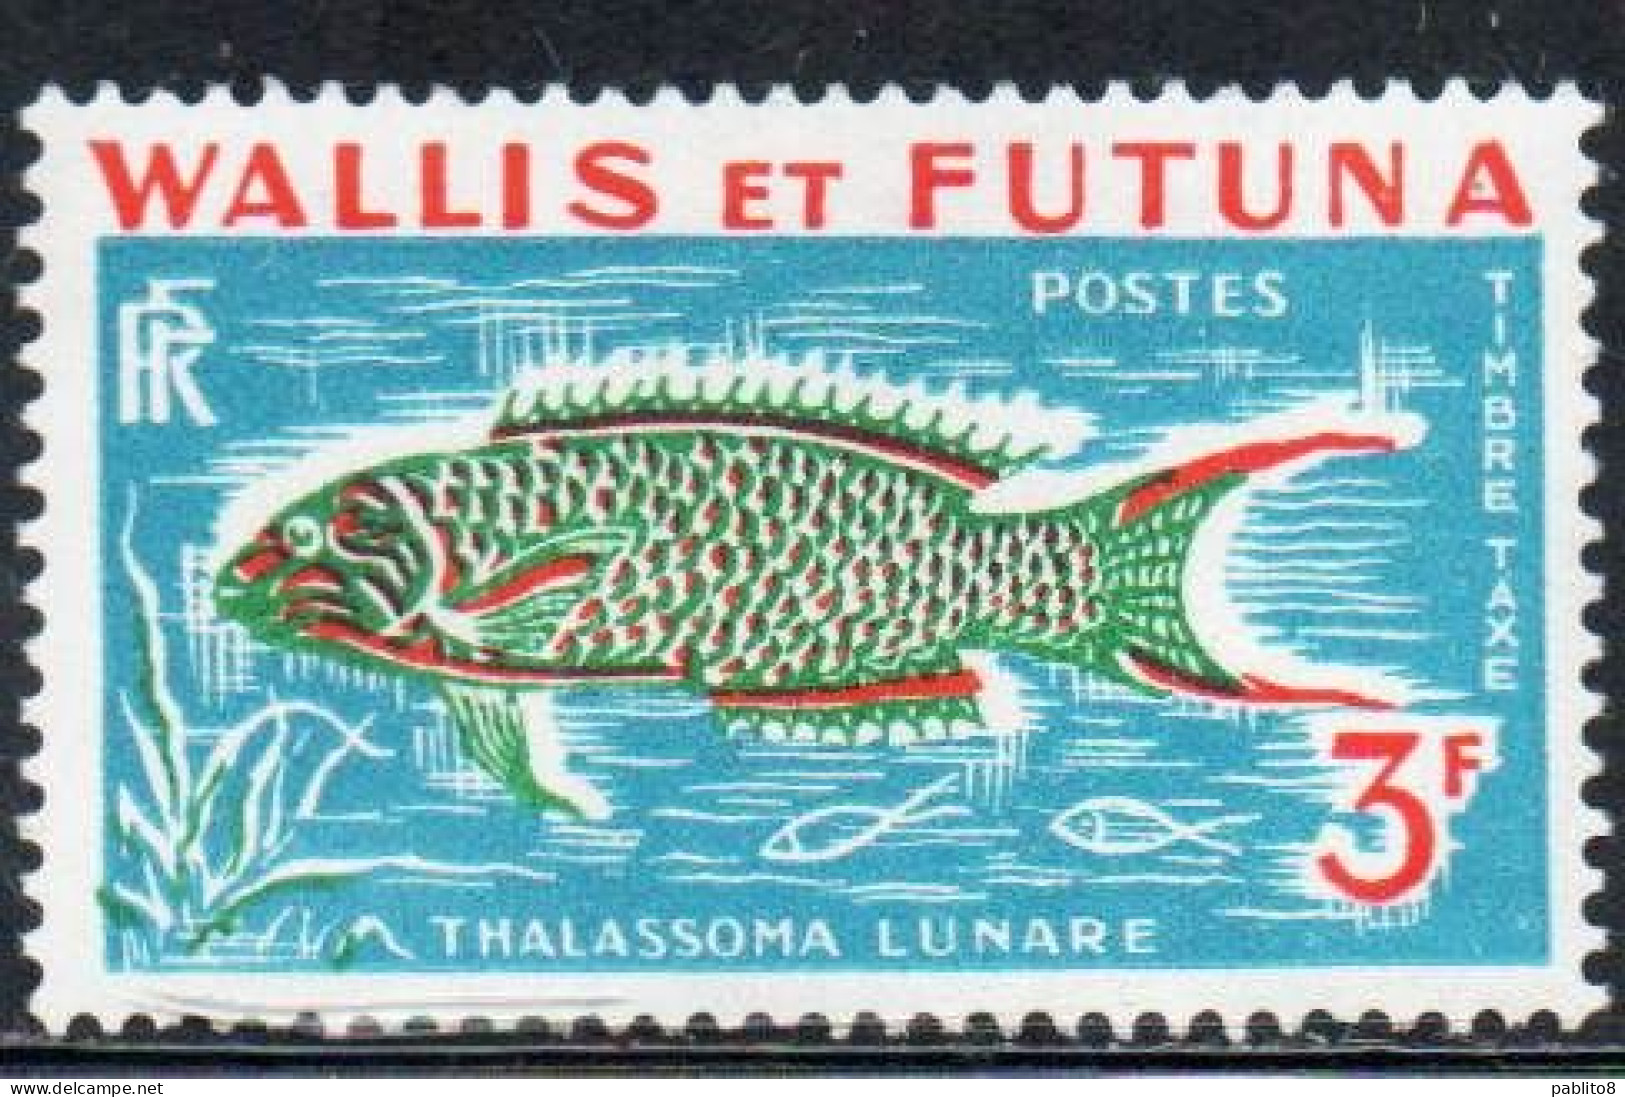 WALLIS AND FUTUNA ISLANDS 1963 POSTAGE DUE STAMPS TAXE SEGNATASSE THALASSOMA LUNARE 3fr MH - Segnatasse